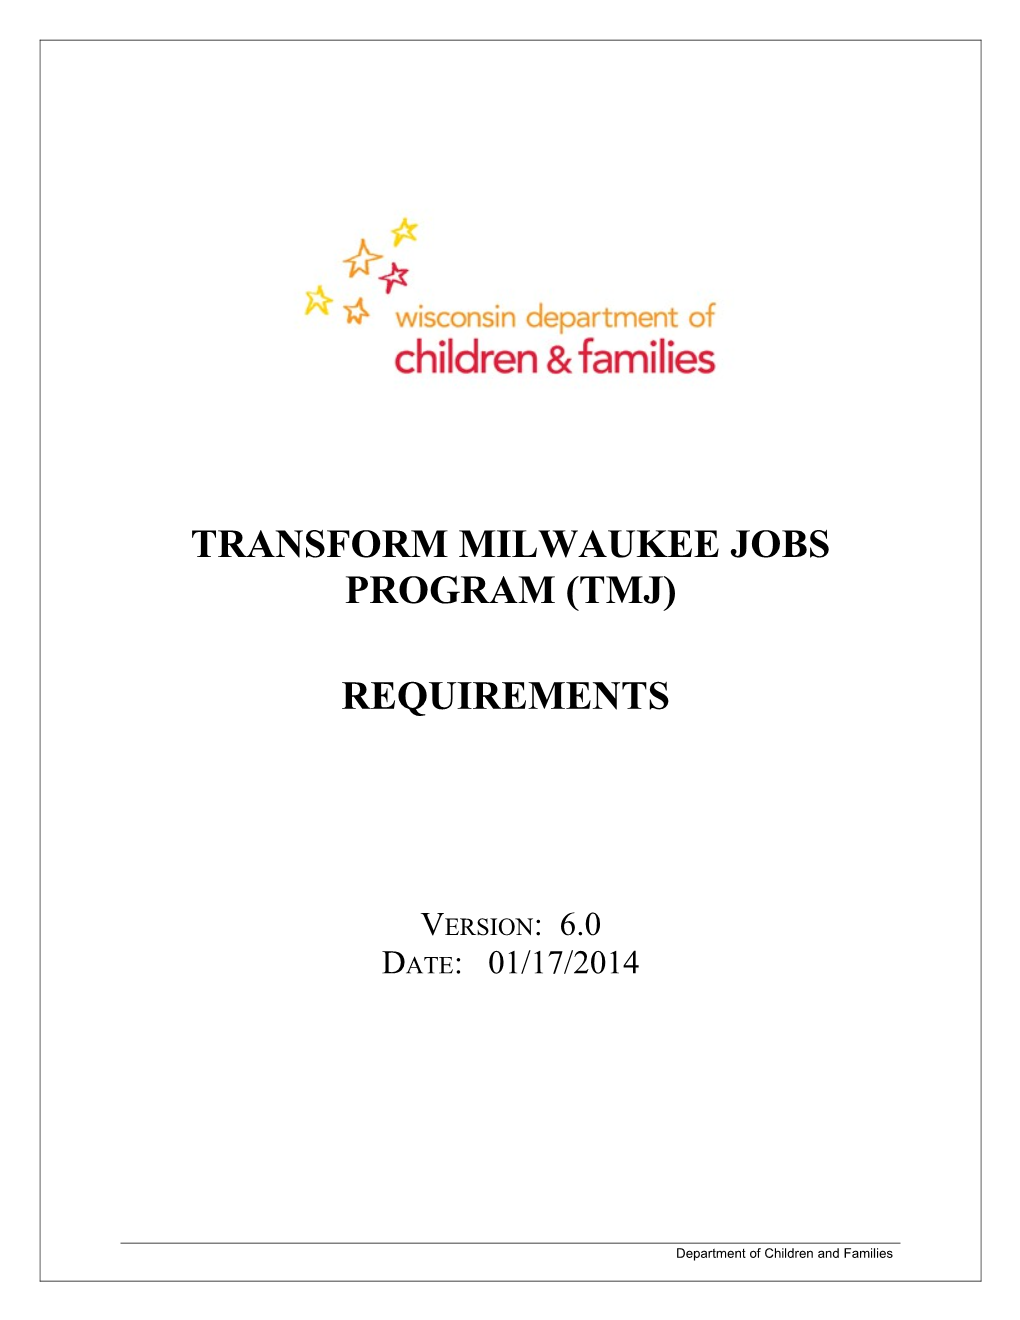 Transform Milwaukee Jobs Program (Tmj)